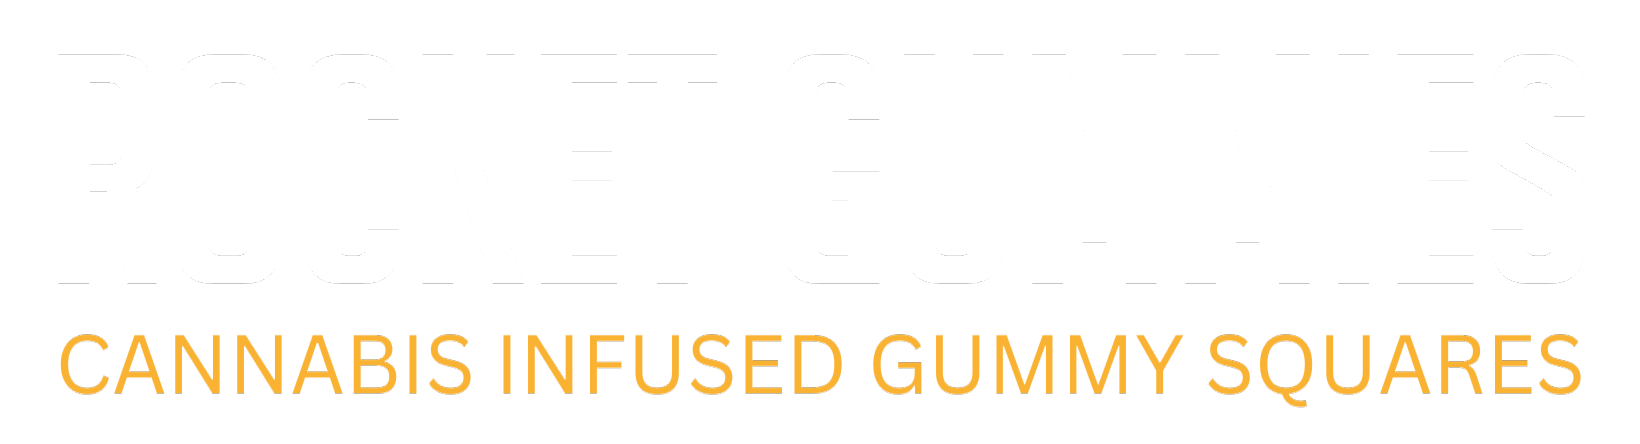 Rocket Gummies logo2